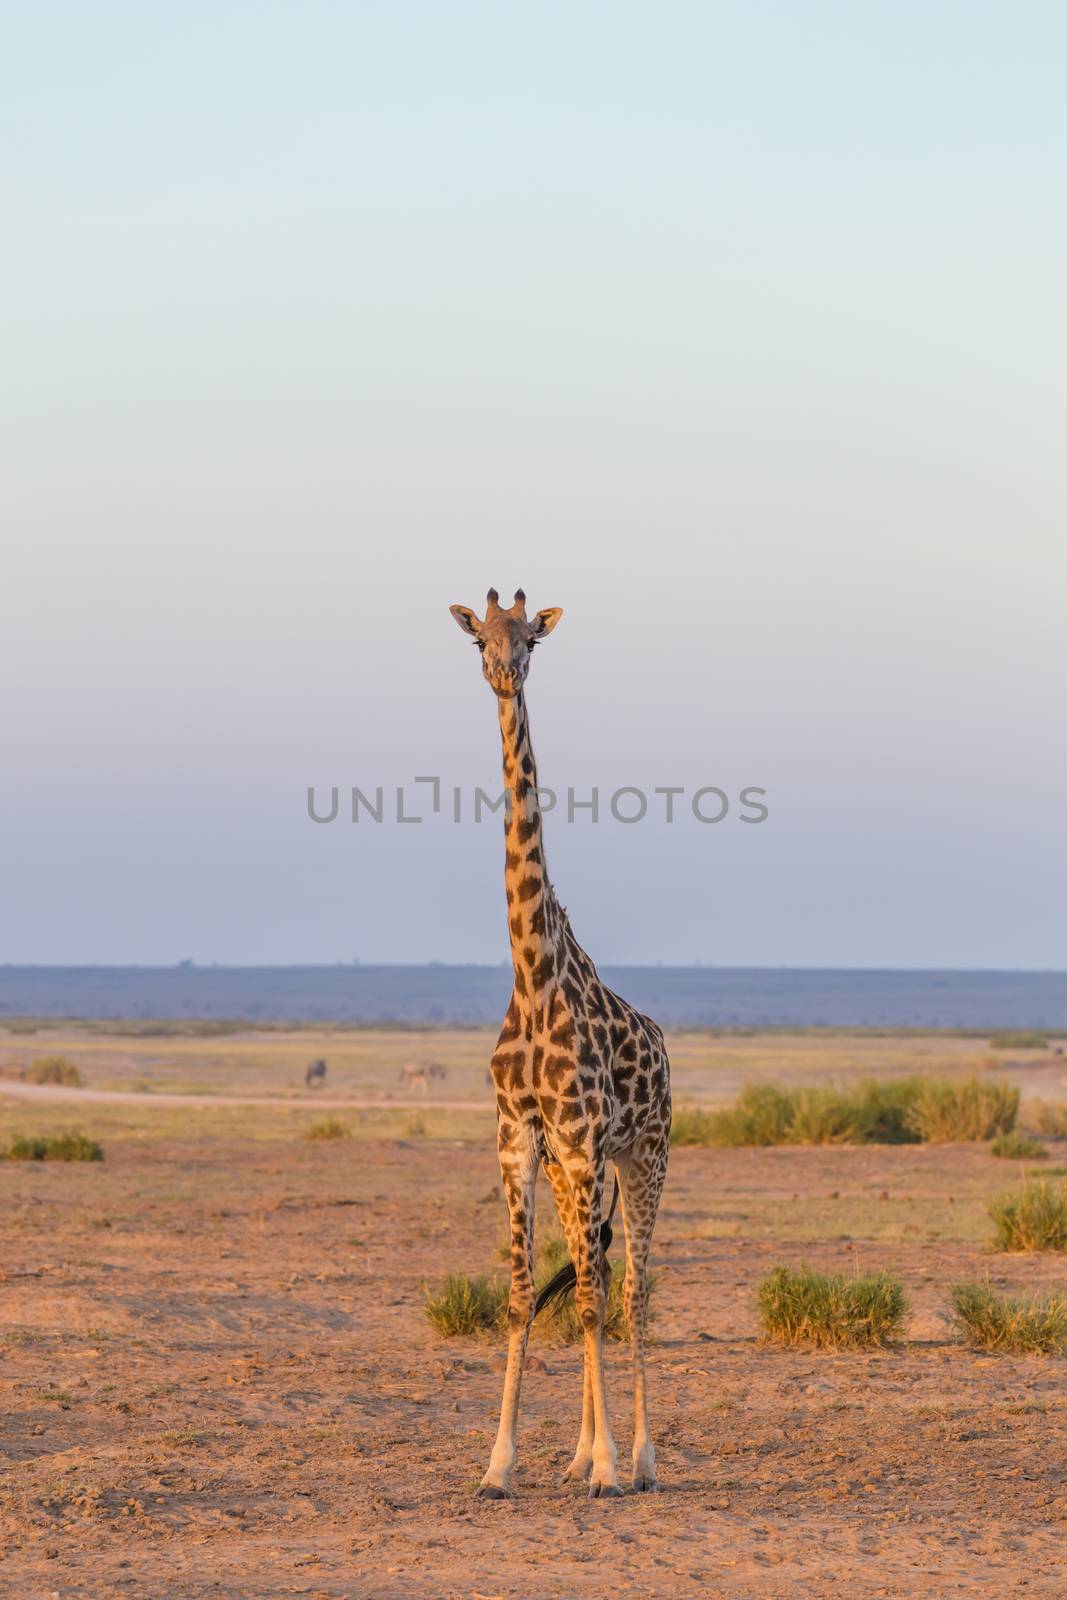 Solitary wild giraffe in Amboseli national park, Tanzania.